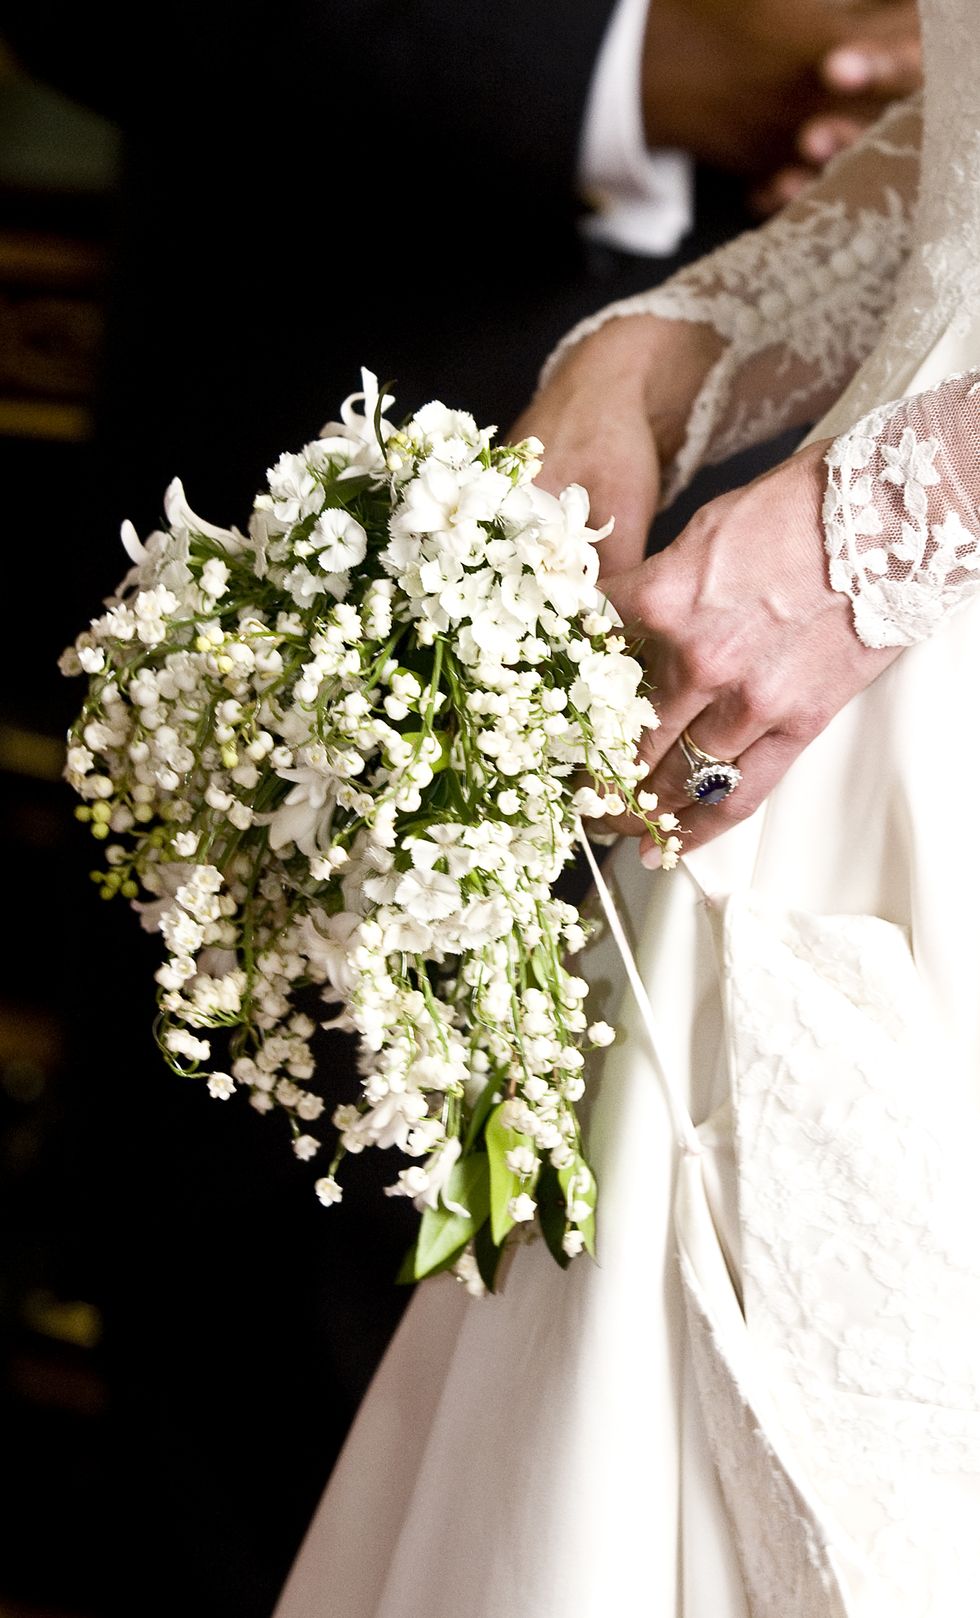 Kate Middleton's bridal bouquet